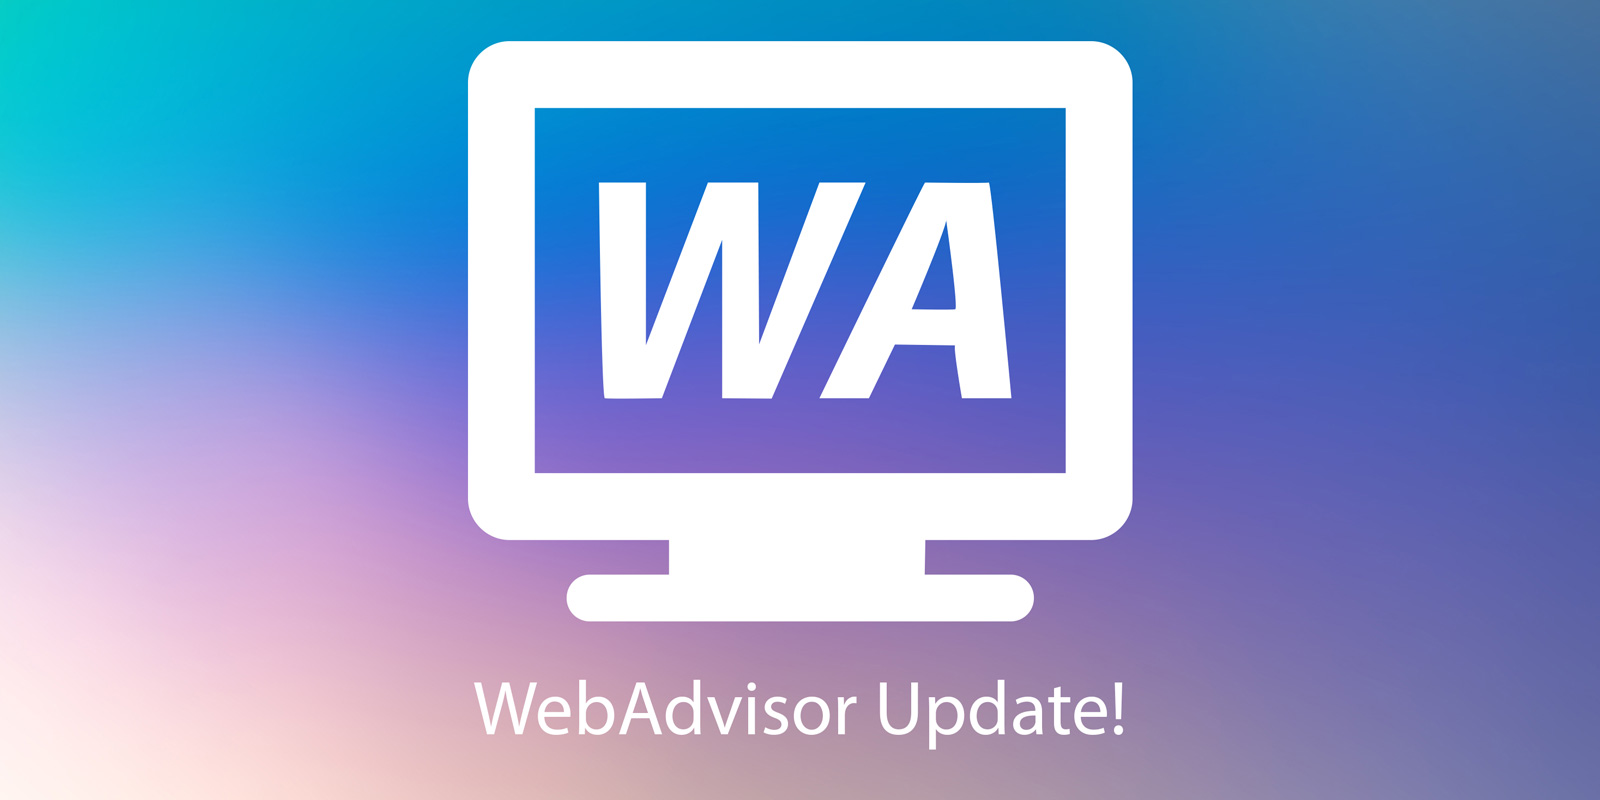 WebAdvisor Updates!